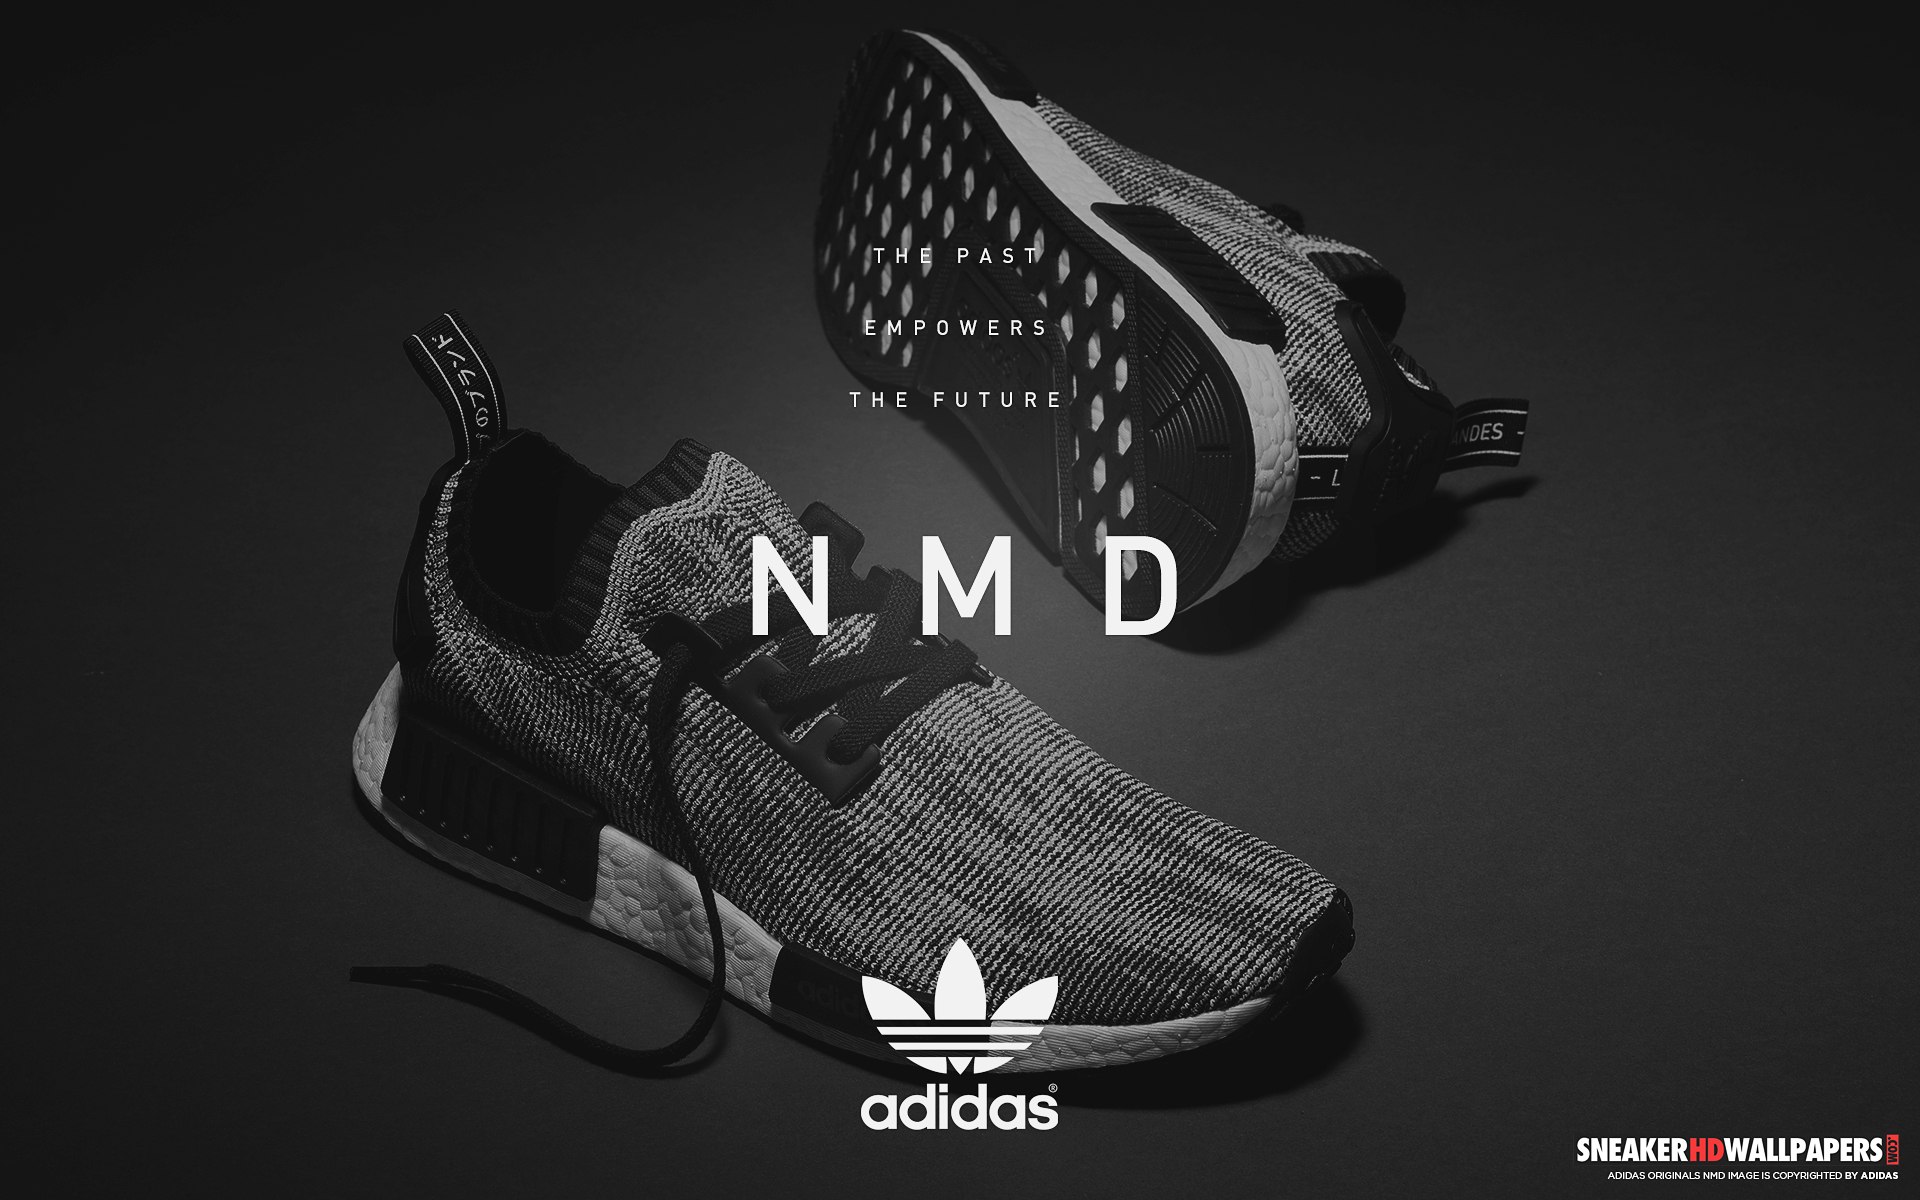 genstand internettet klæde 20+] Adidas NMD Wallpapers - WallpaperSafari